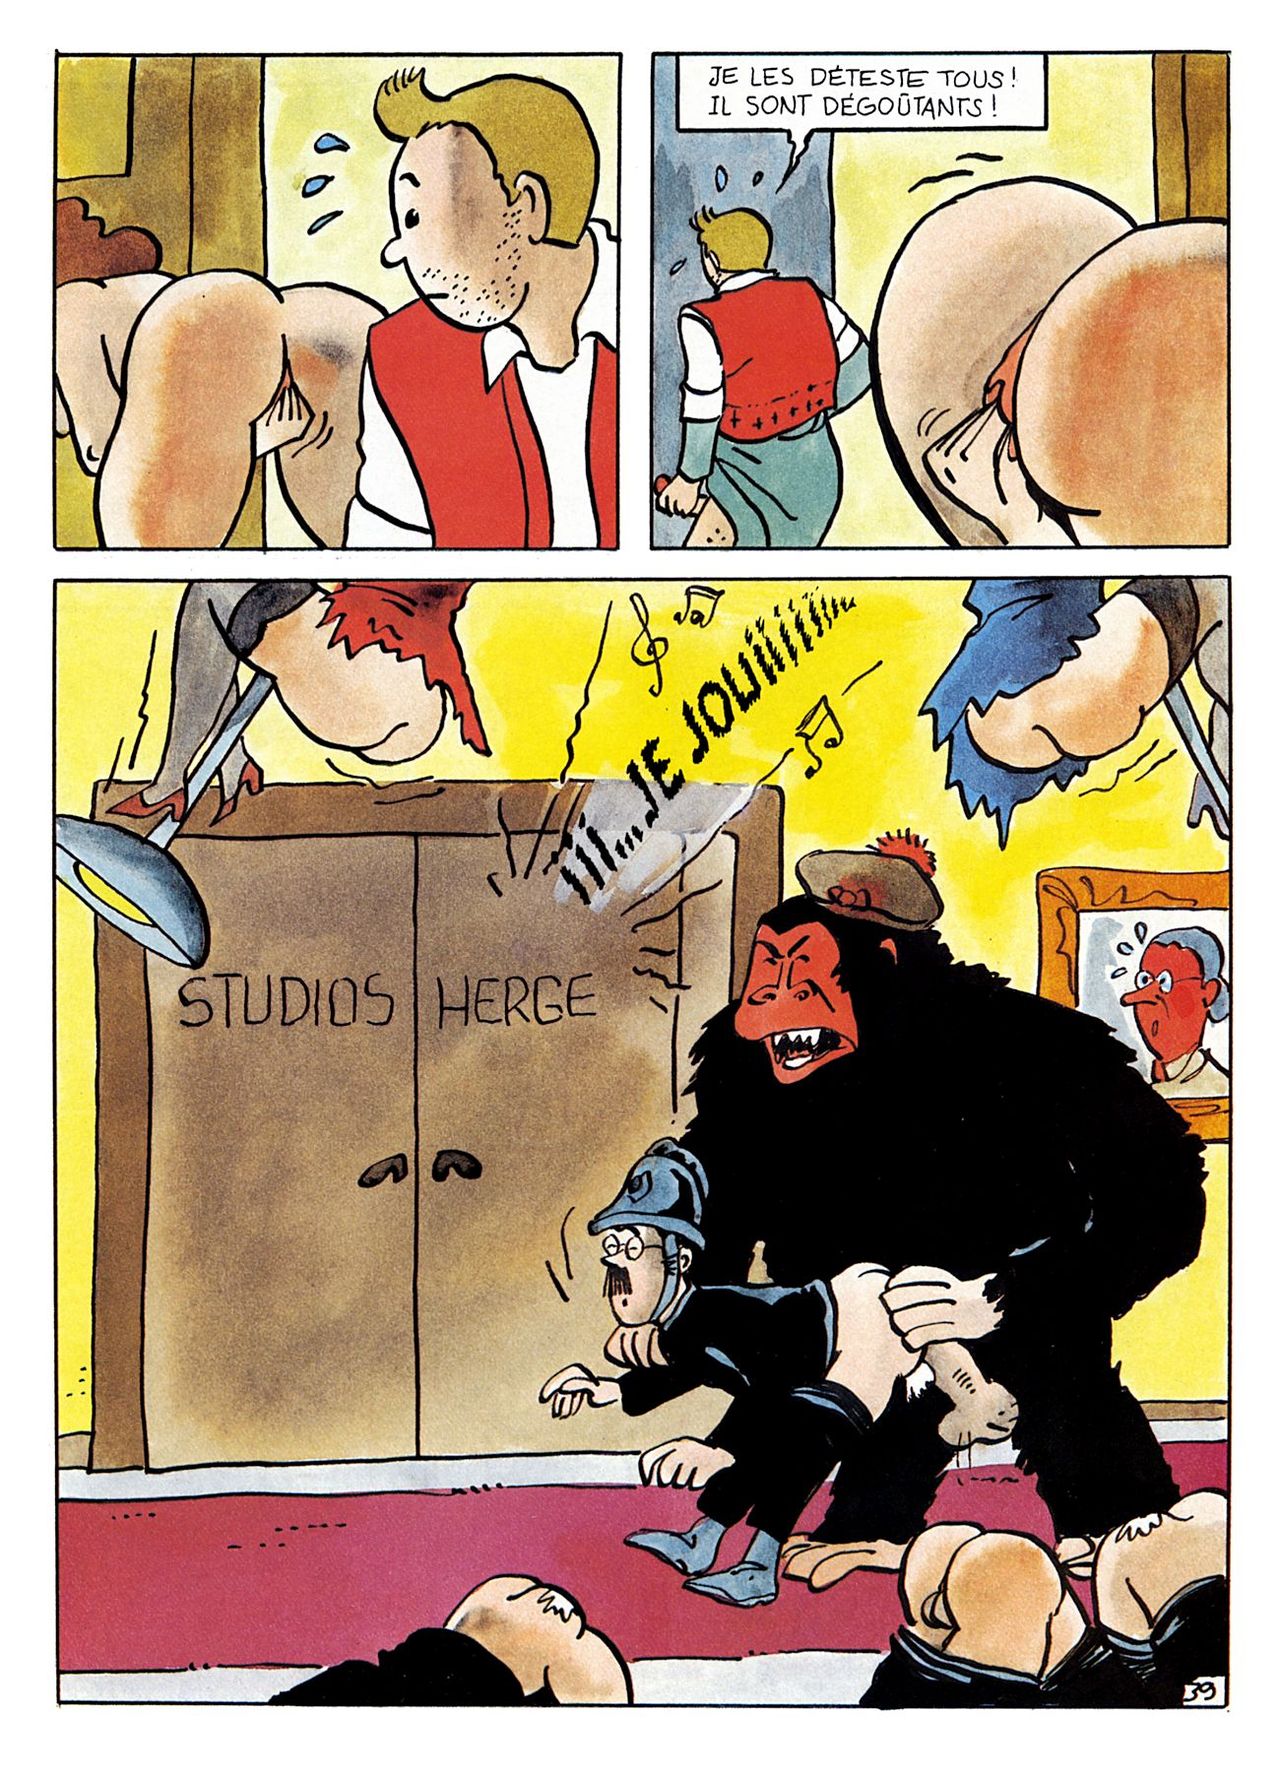 La Vie Sexuelle De Tintin numero d'image 42